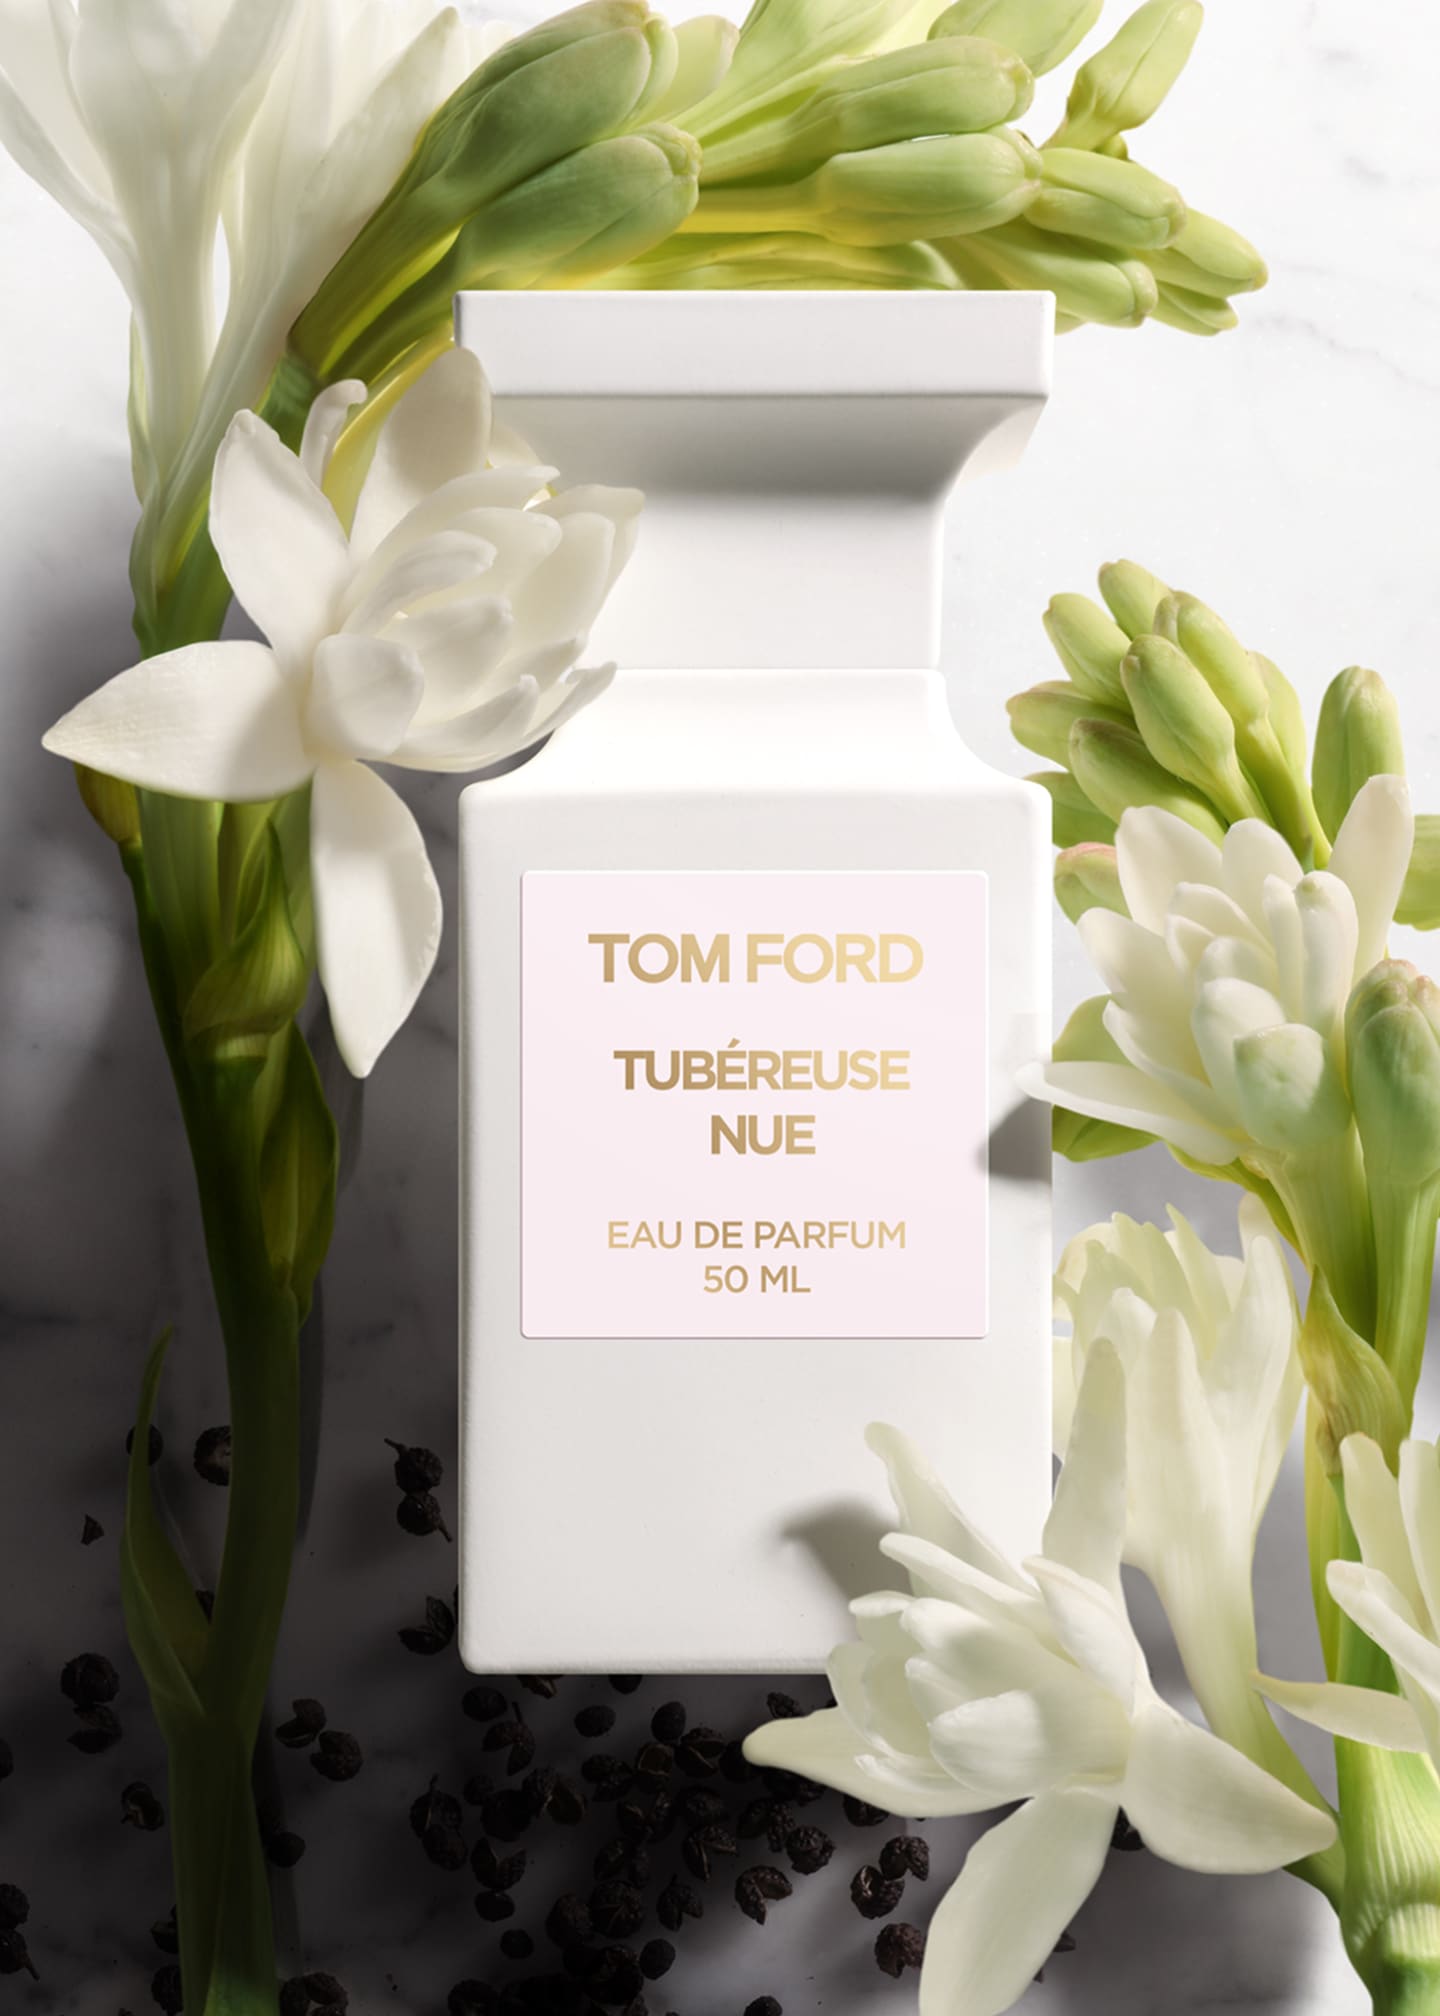 TOM FORD Tubereuse Nue Eau de Parfum Decanter, 8.5 oz.